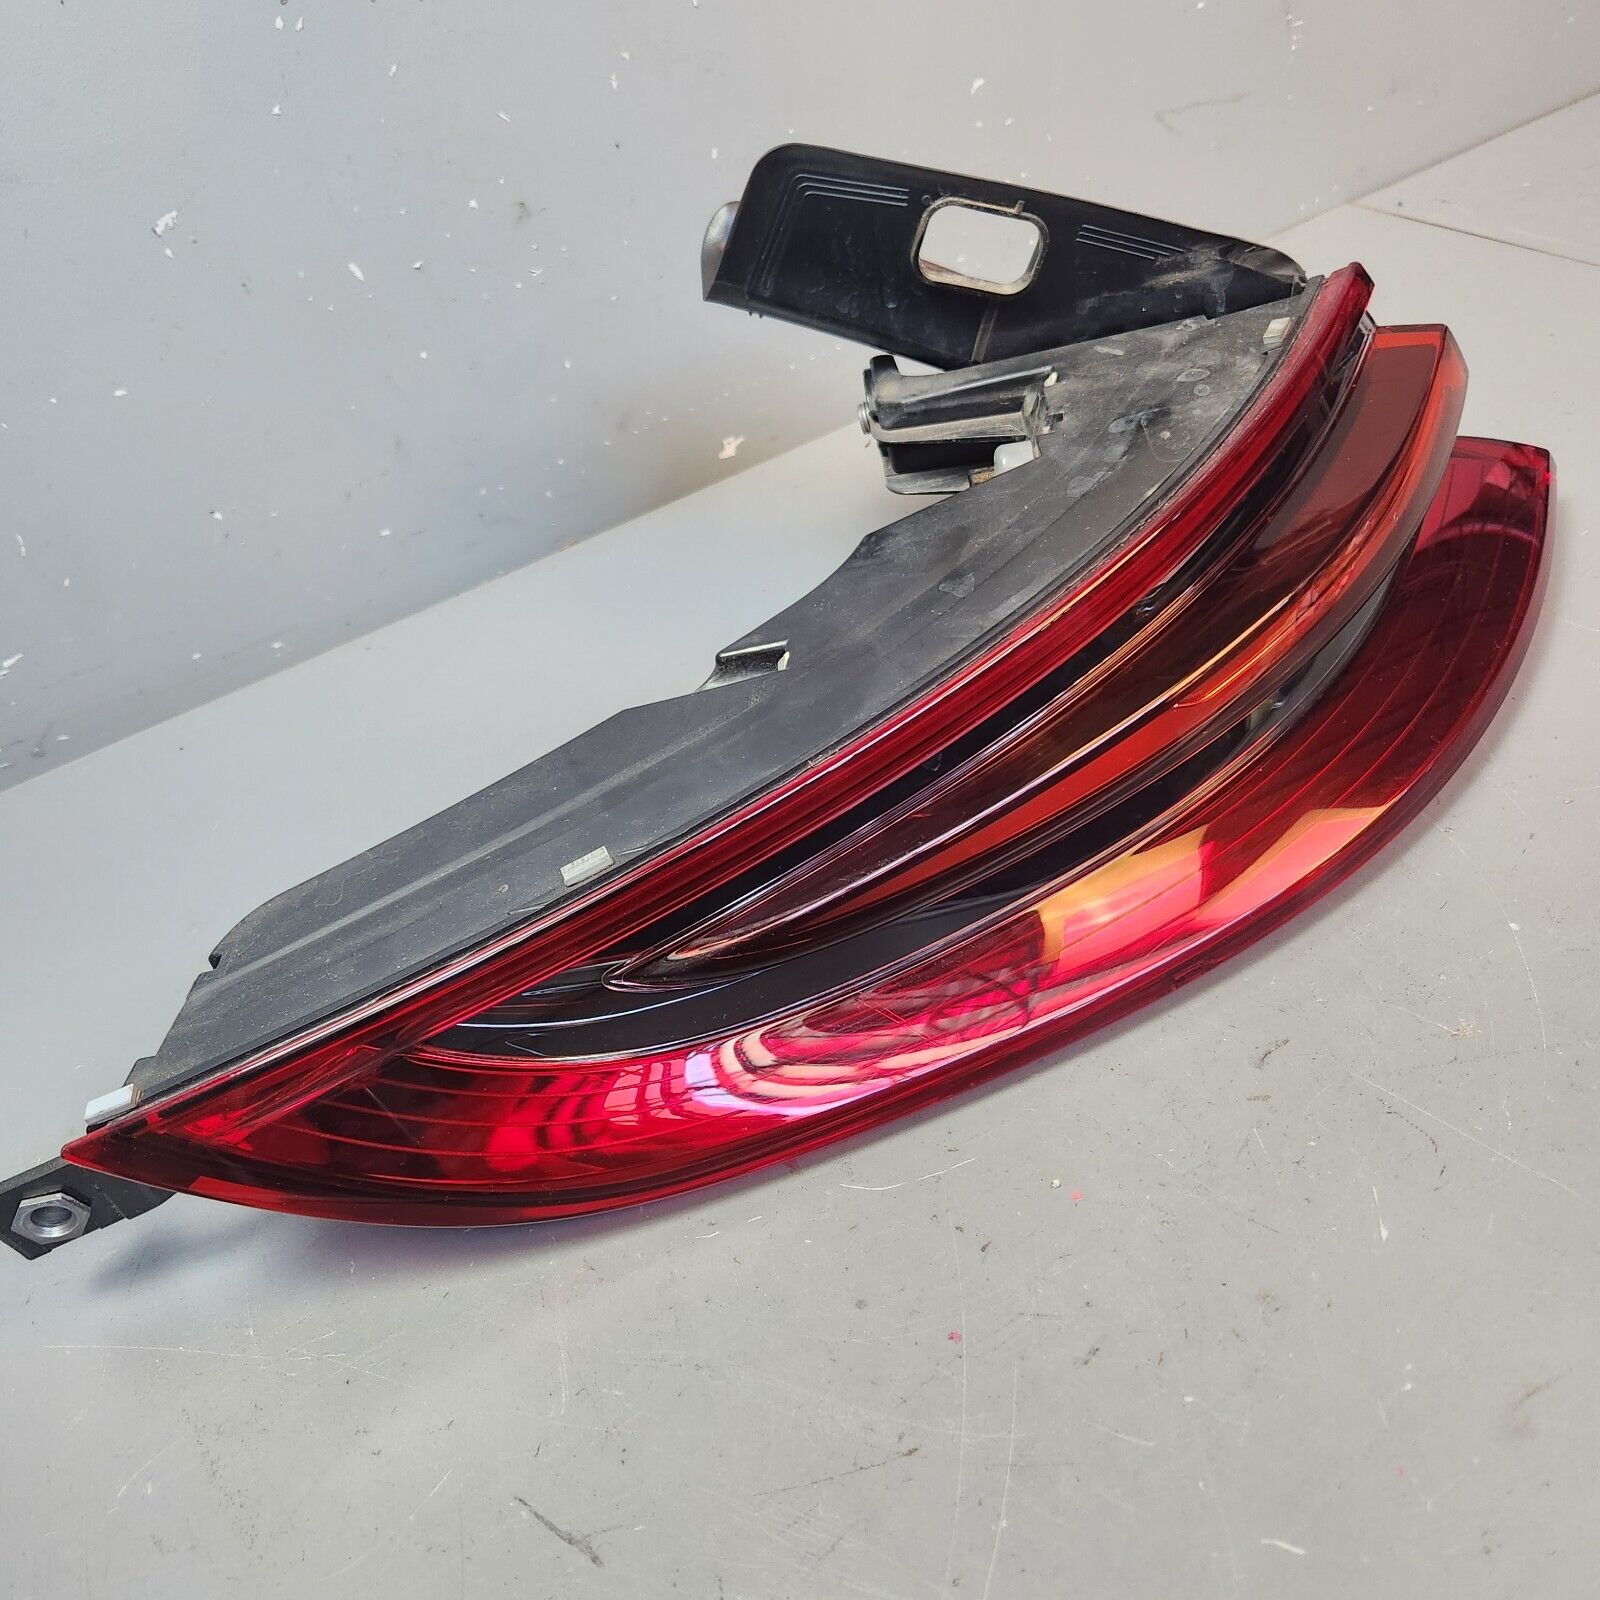 USテールライト 専用テールライトセットPorsche Panamera 971 2016- Ulo純正 Exclusive Tail Light Set Left Right For Porsche Panamera 971 2016- ULO Genuine